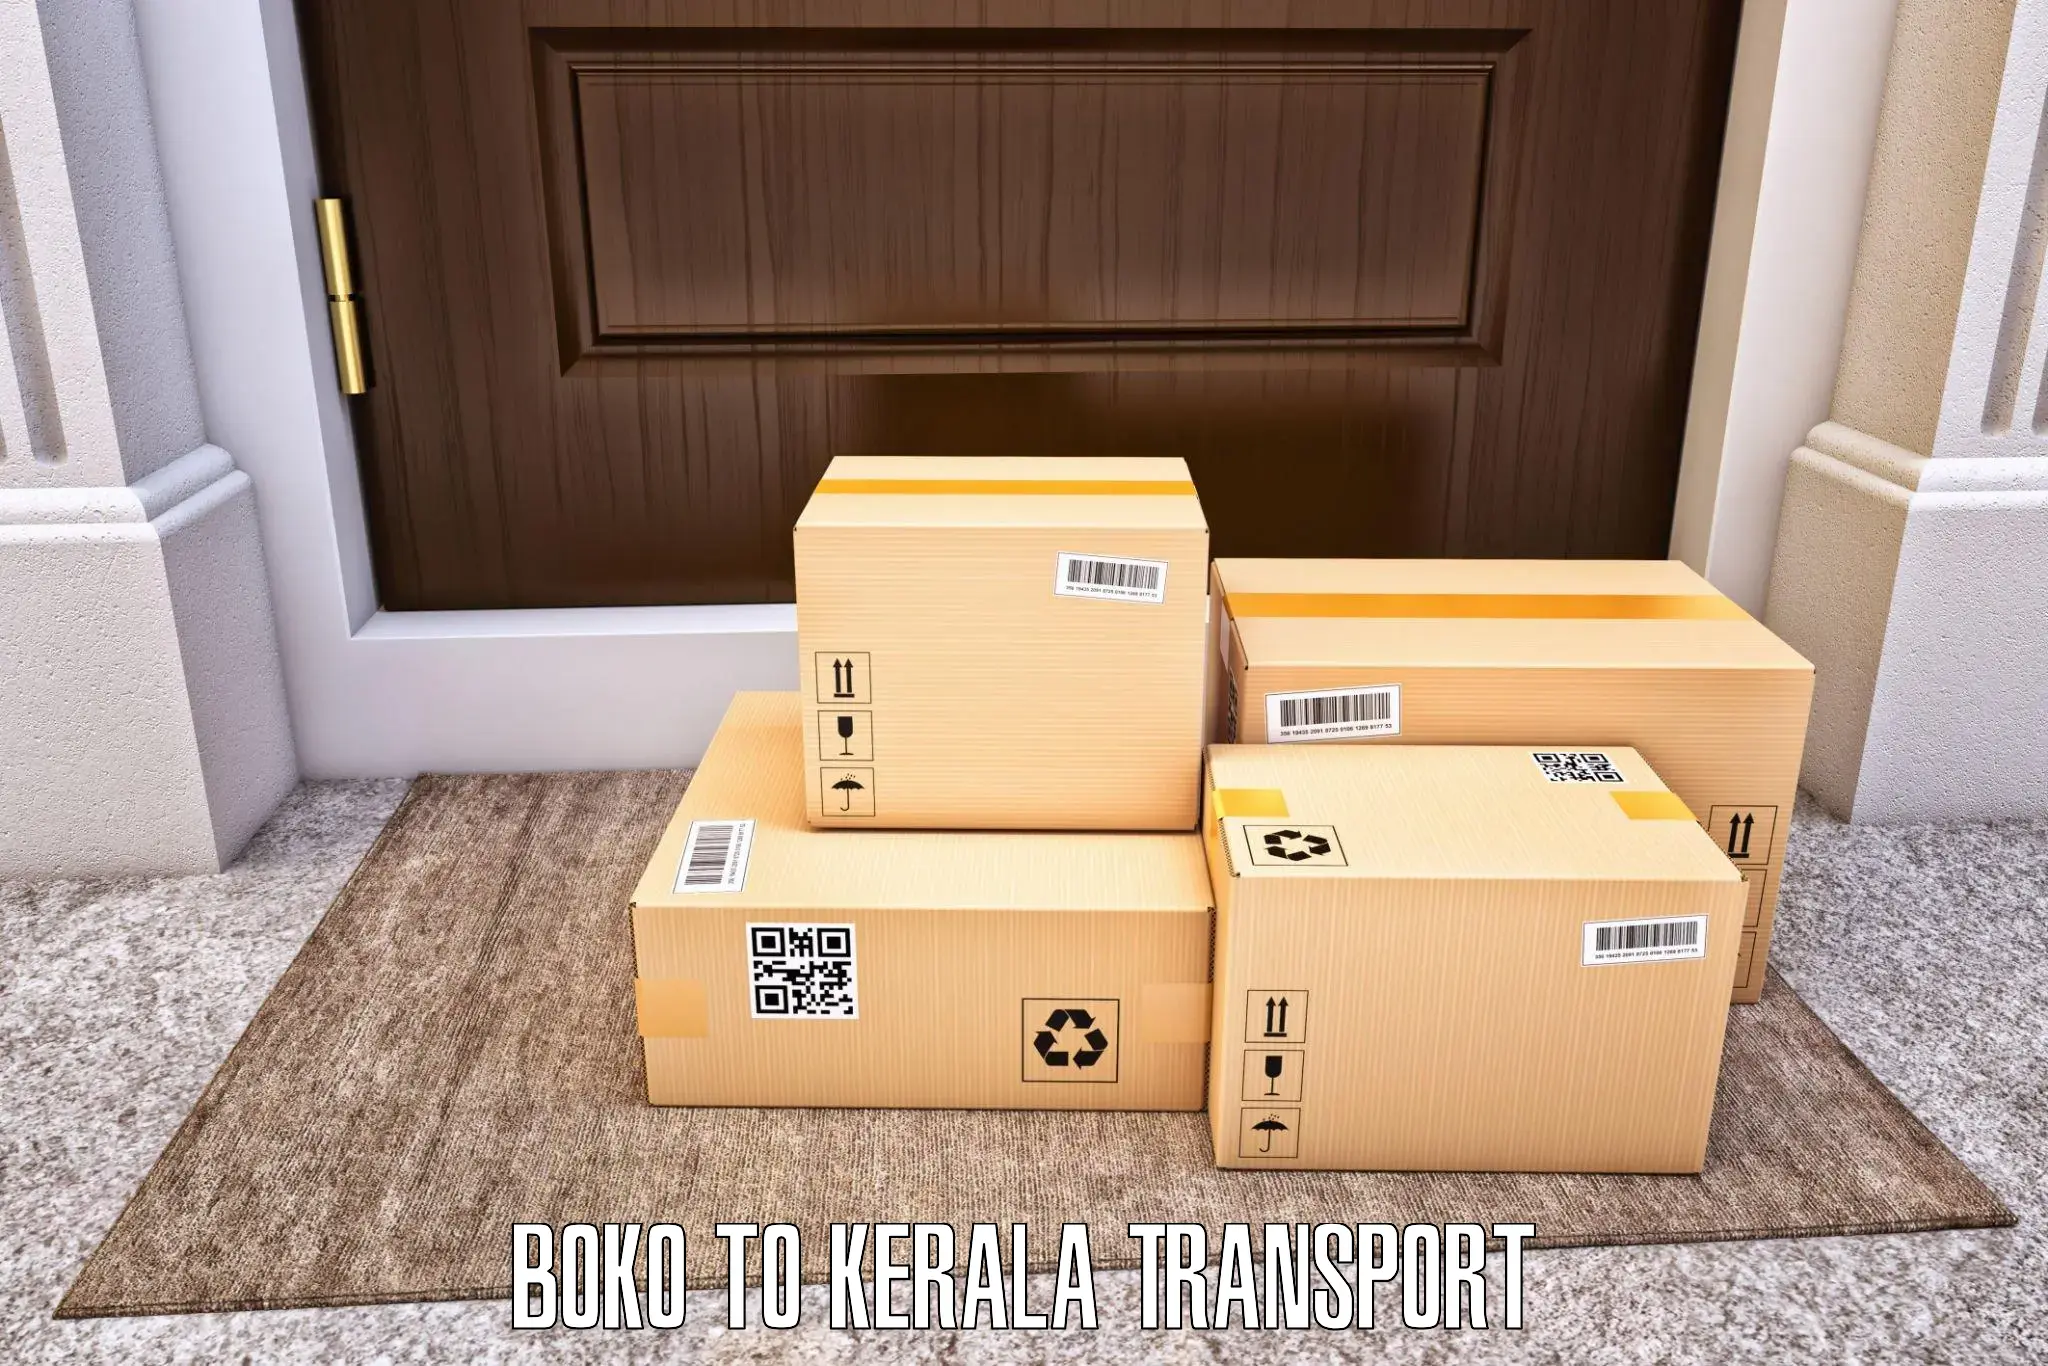 Vehicle parcel service Boko to Nochad